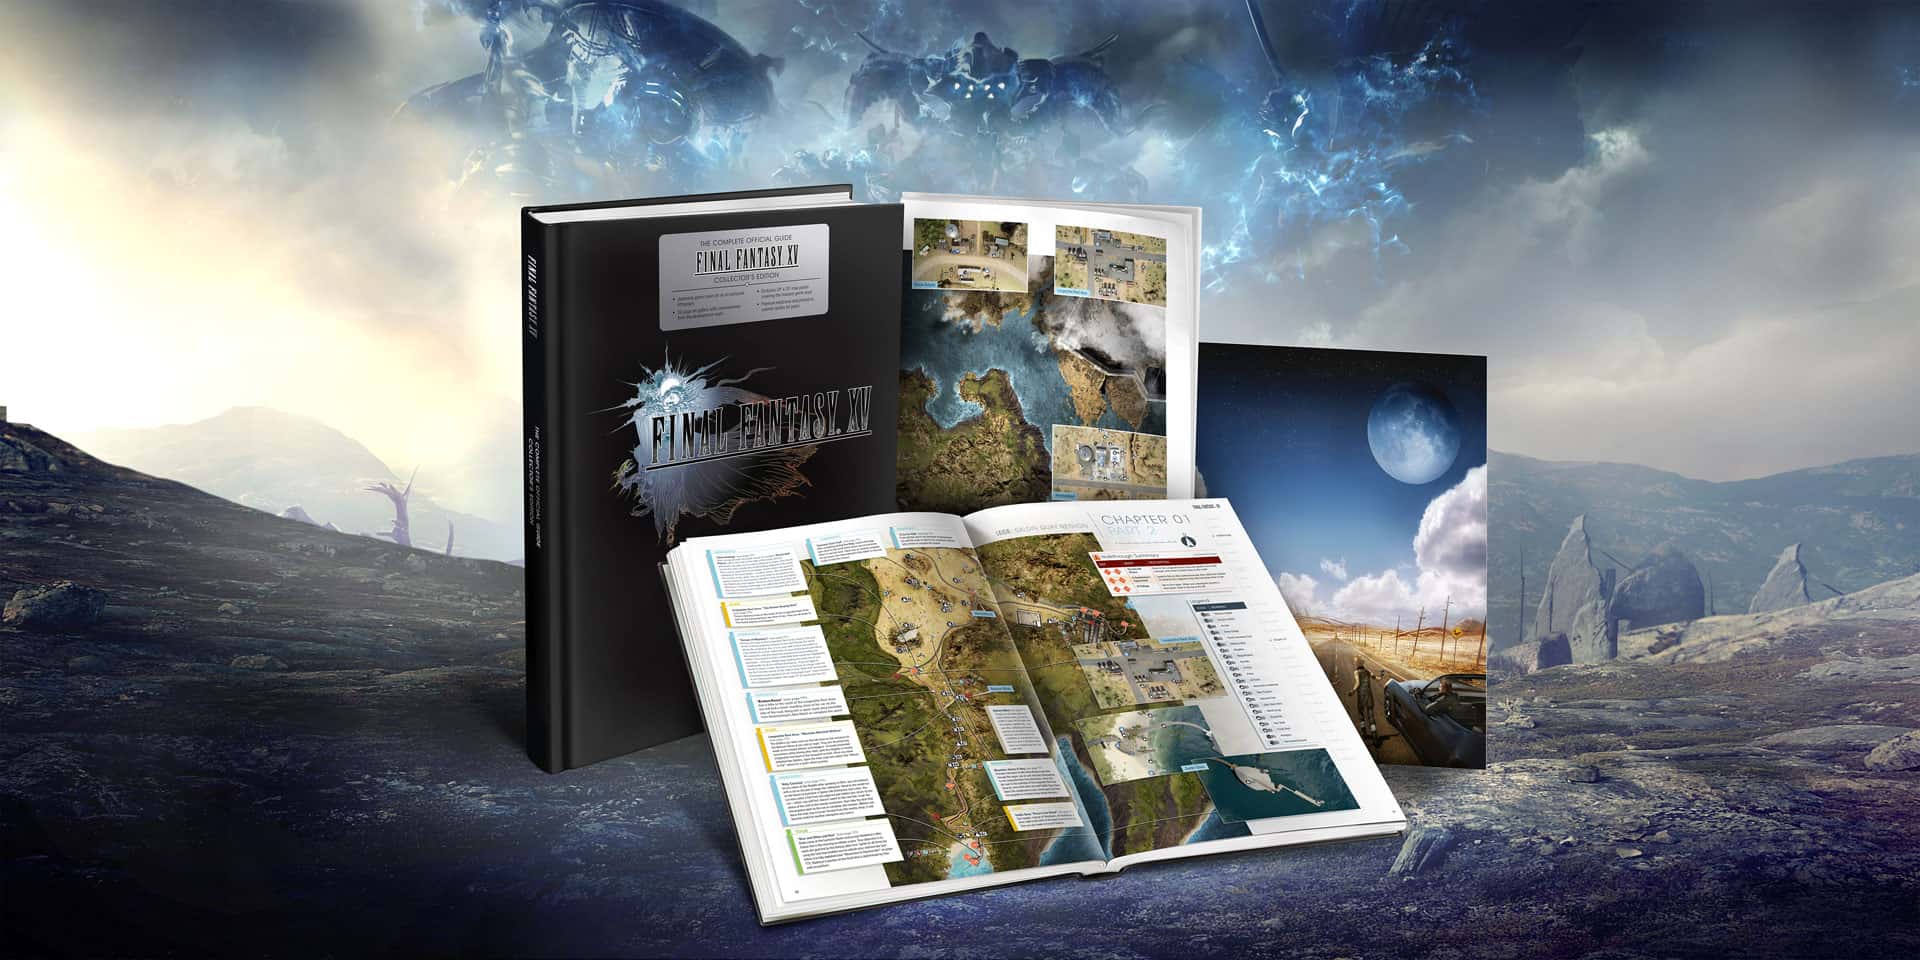 final fantasy xv royal edition strategy guide pdf download